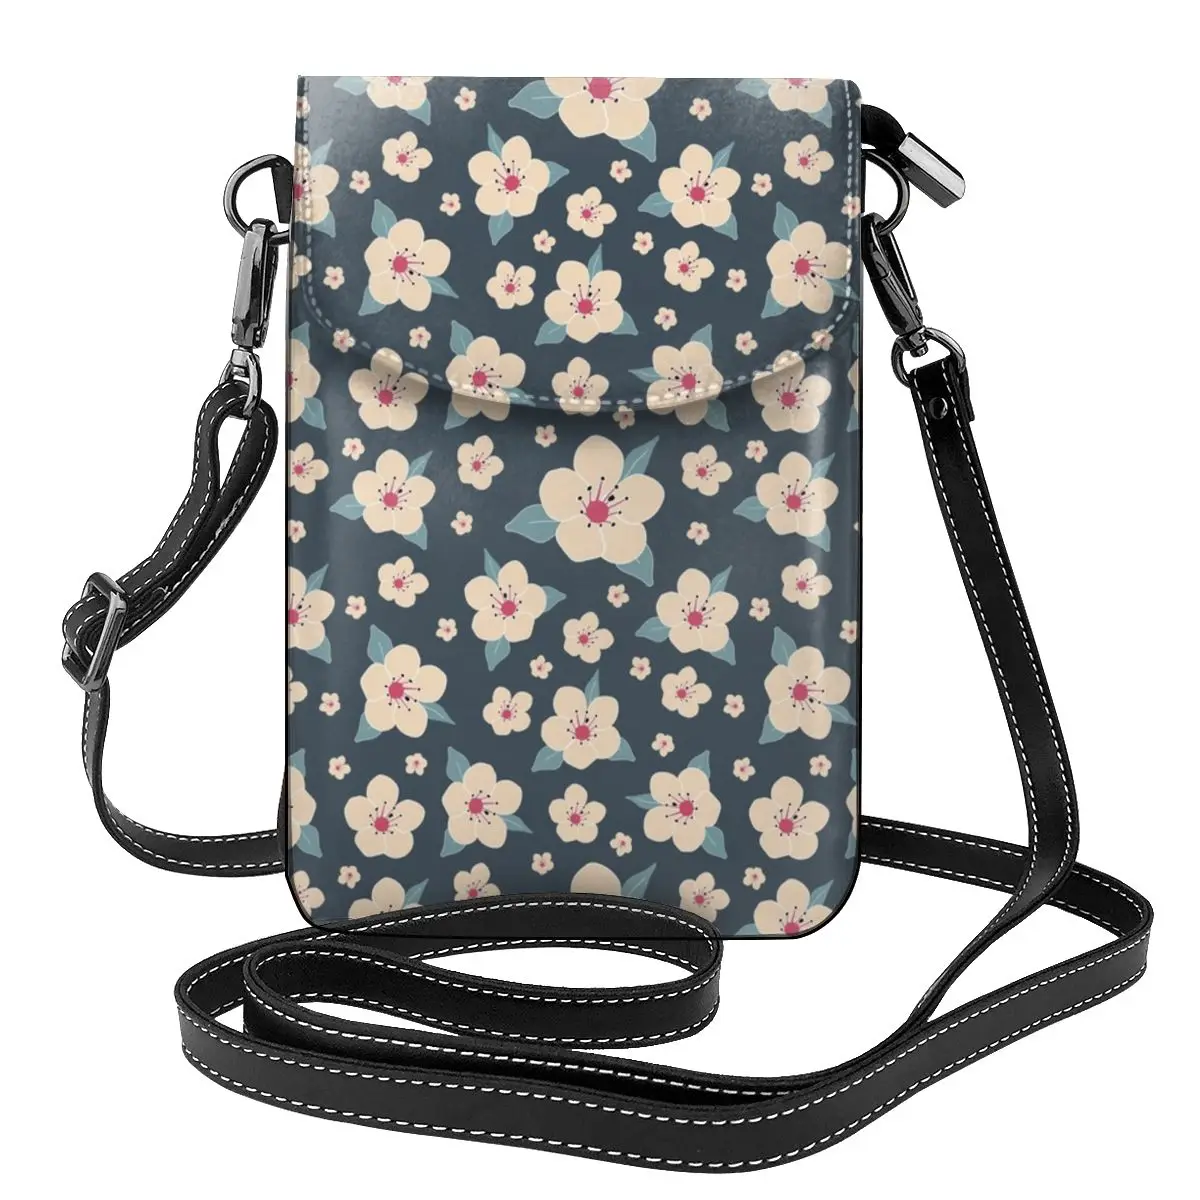 

Dark Blossom Flower Shoulder Bag Cherry Peach Floral Fashion Aesthetic Women Bags Leather Shopping Female Purse